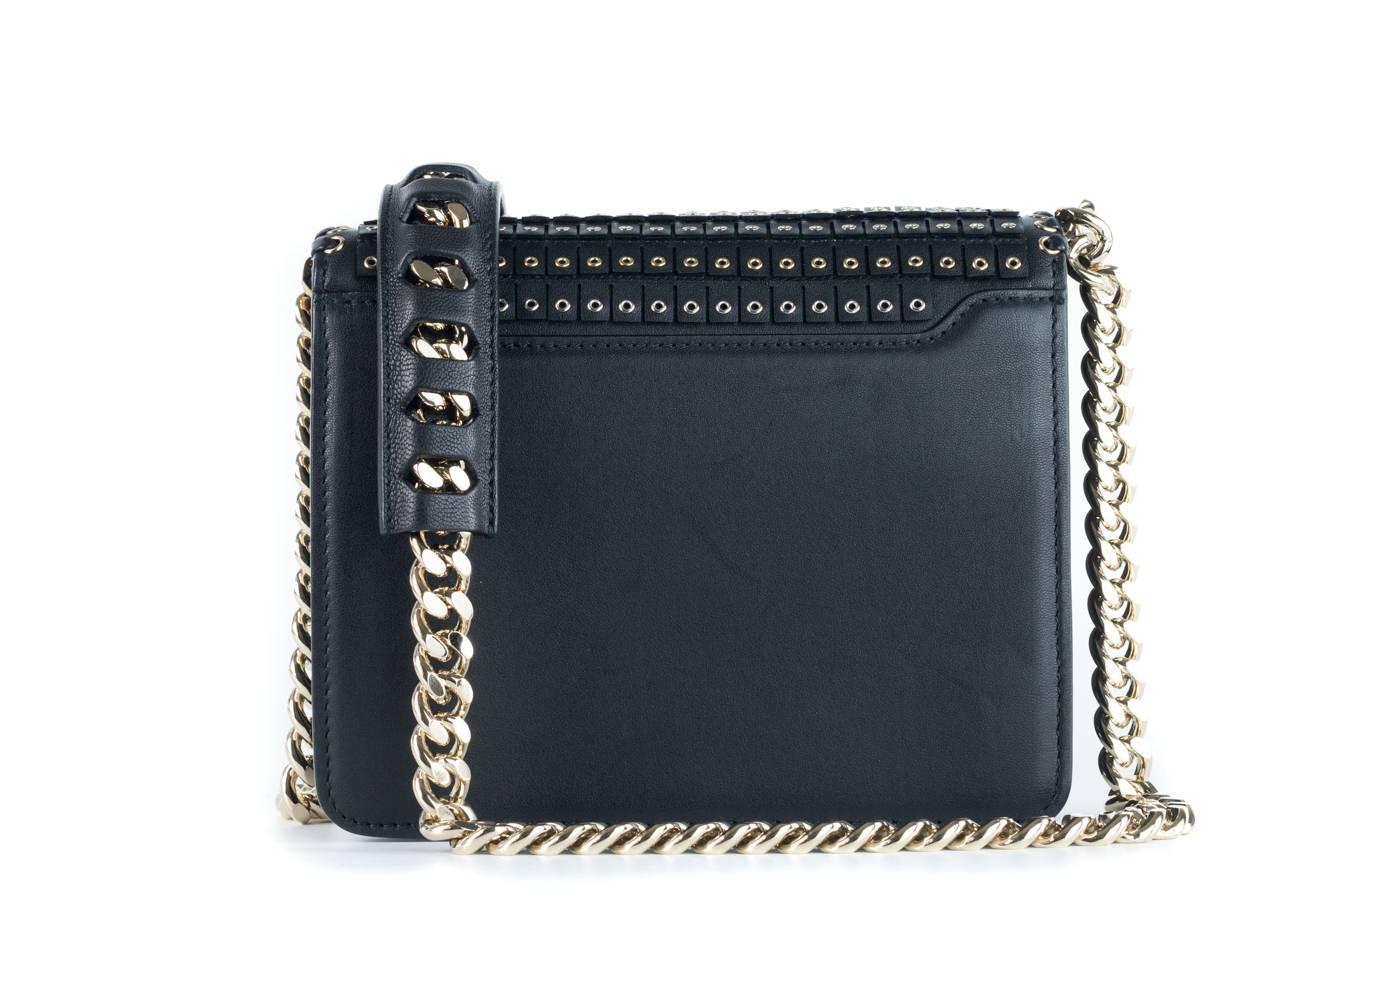 Roberto Cavalli Women's Mini Black Borsa Flap Shoulder Bag In New Condition For Sale In Brooklyn, NY